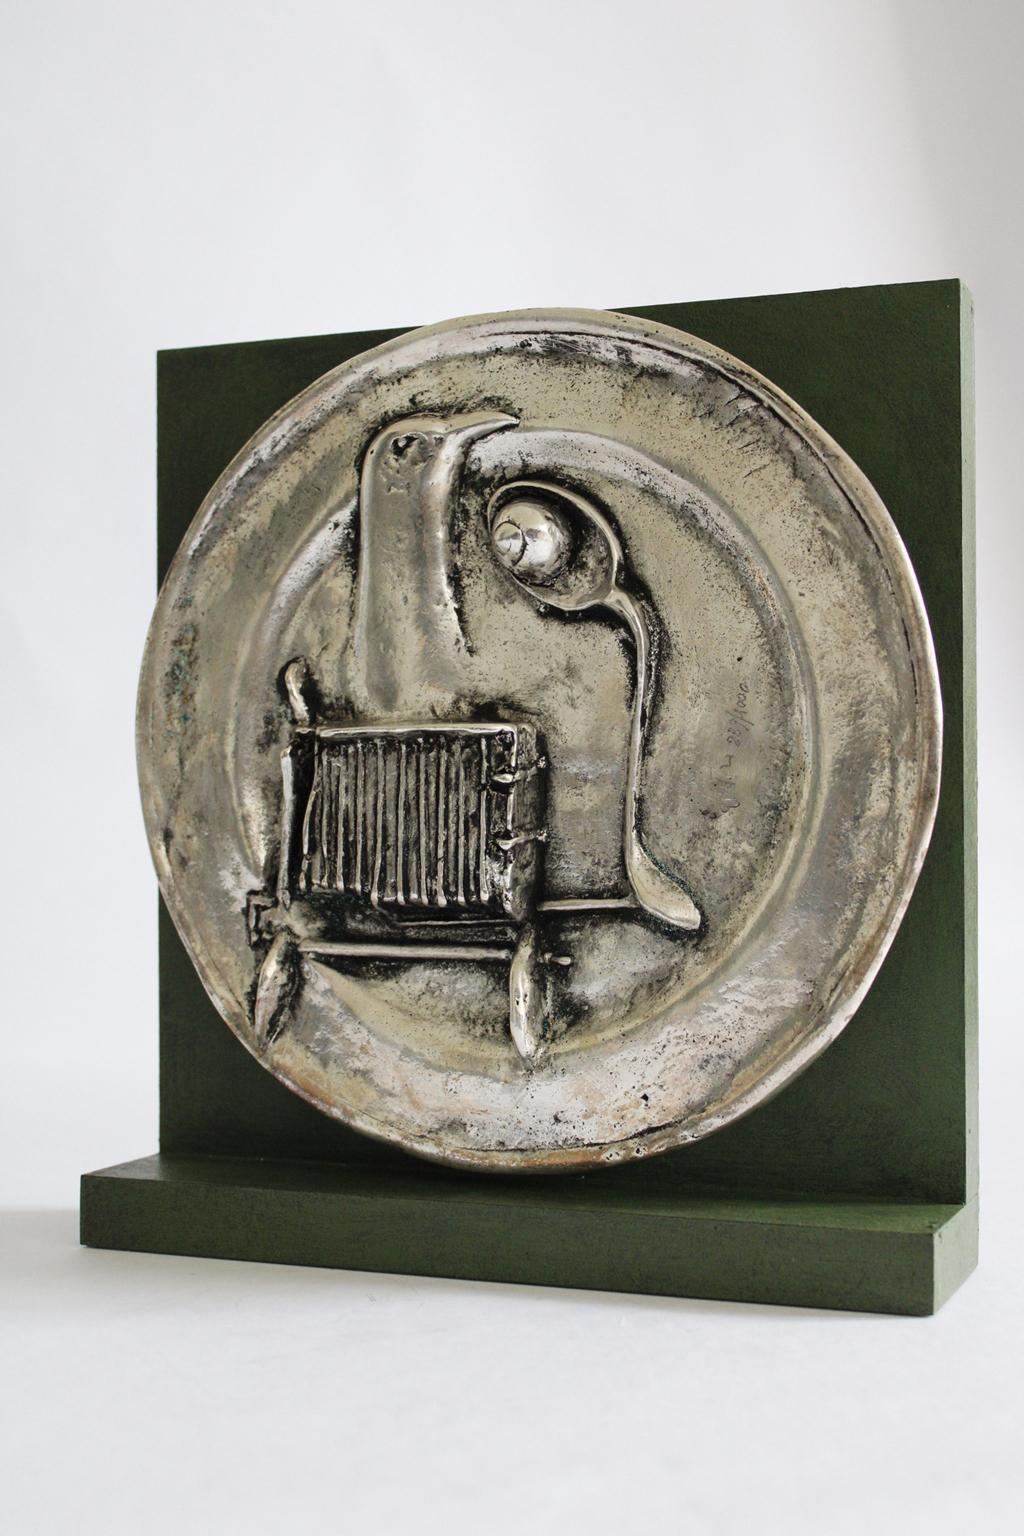 Appearances Italien 1980 Mehrfach versilberte Bronze auf bemaltem Holz (Abstrakt), Sculpture, von Novello Finotti